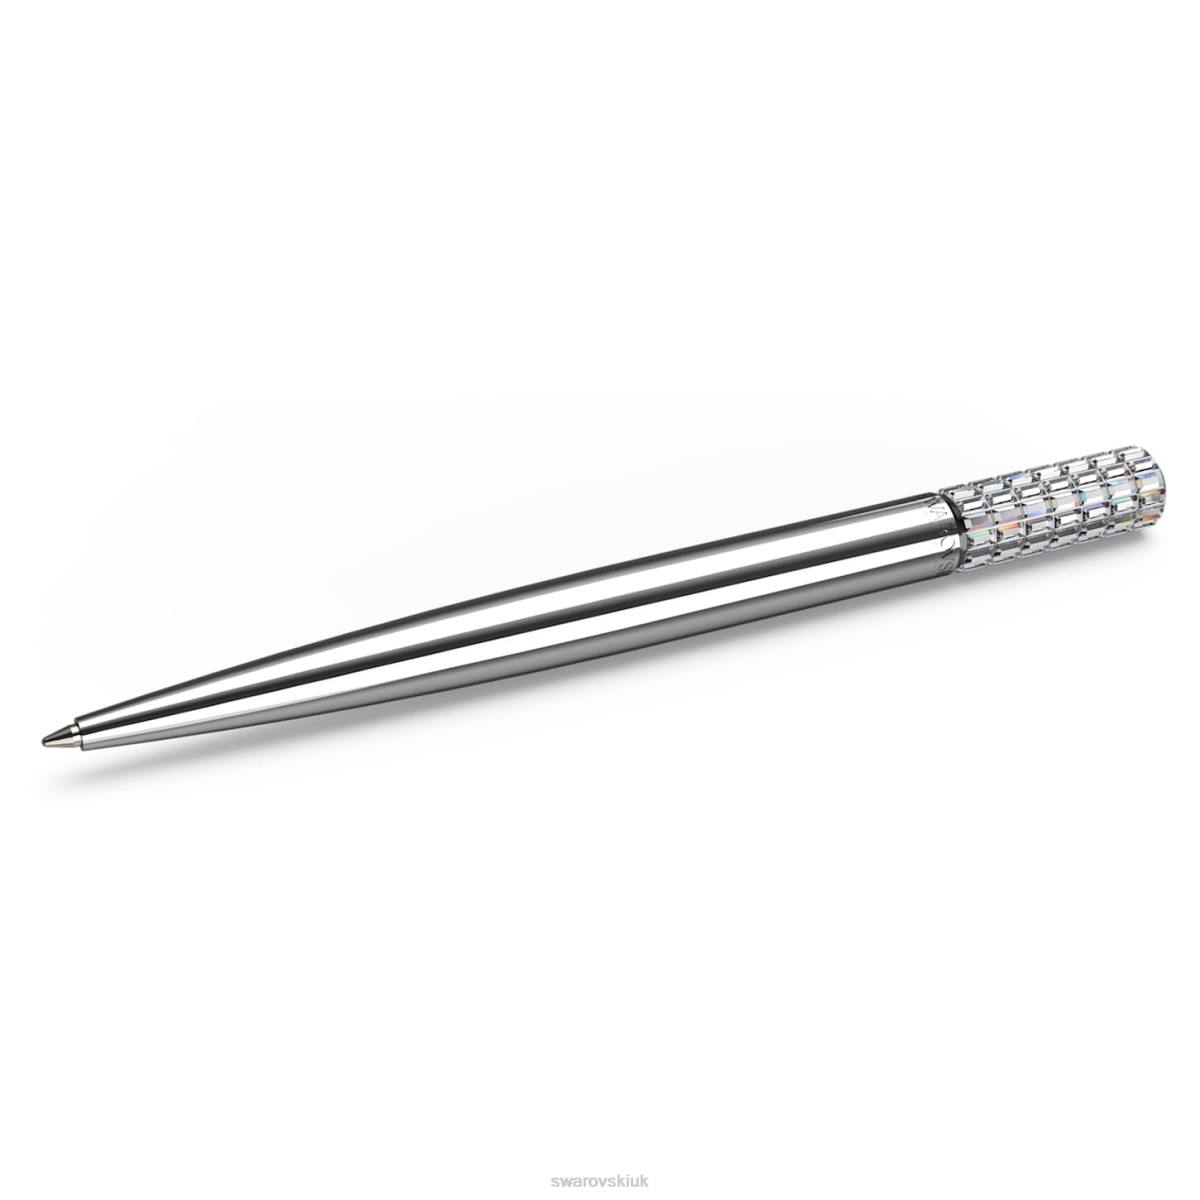 Accessories Swarovski Ballpoint pen Silver tone, Chrome plated 48JX1278